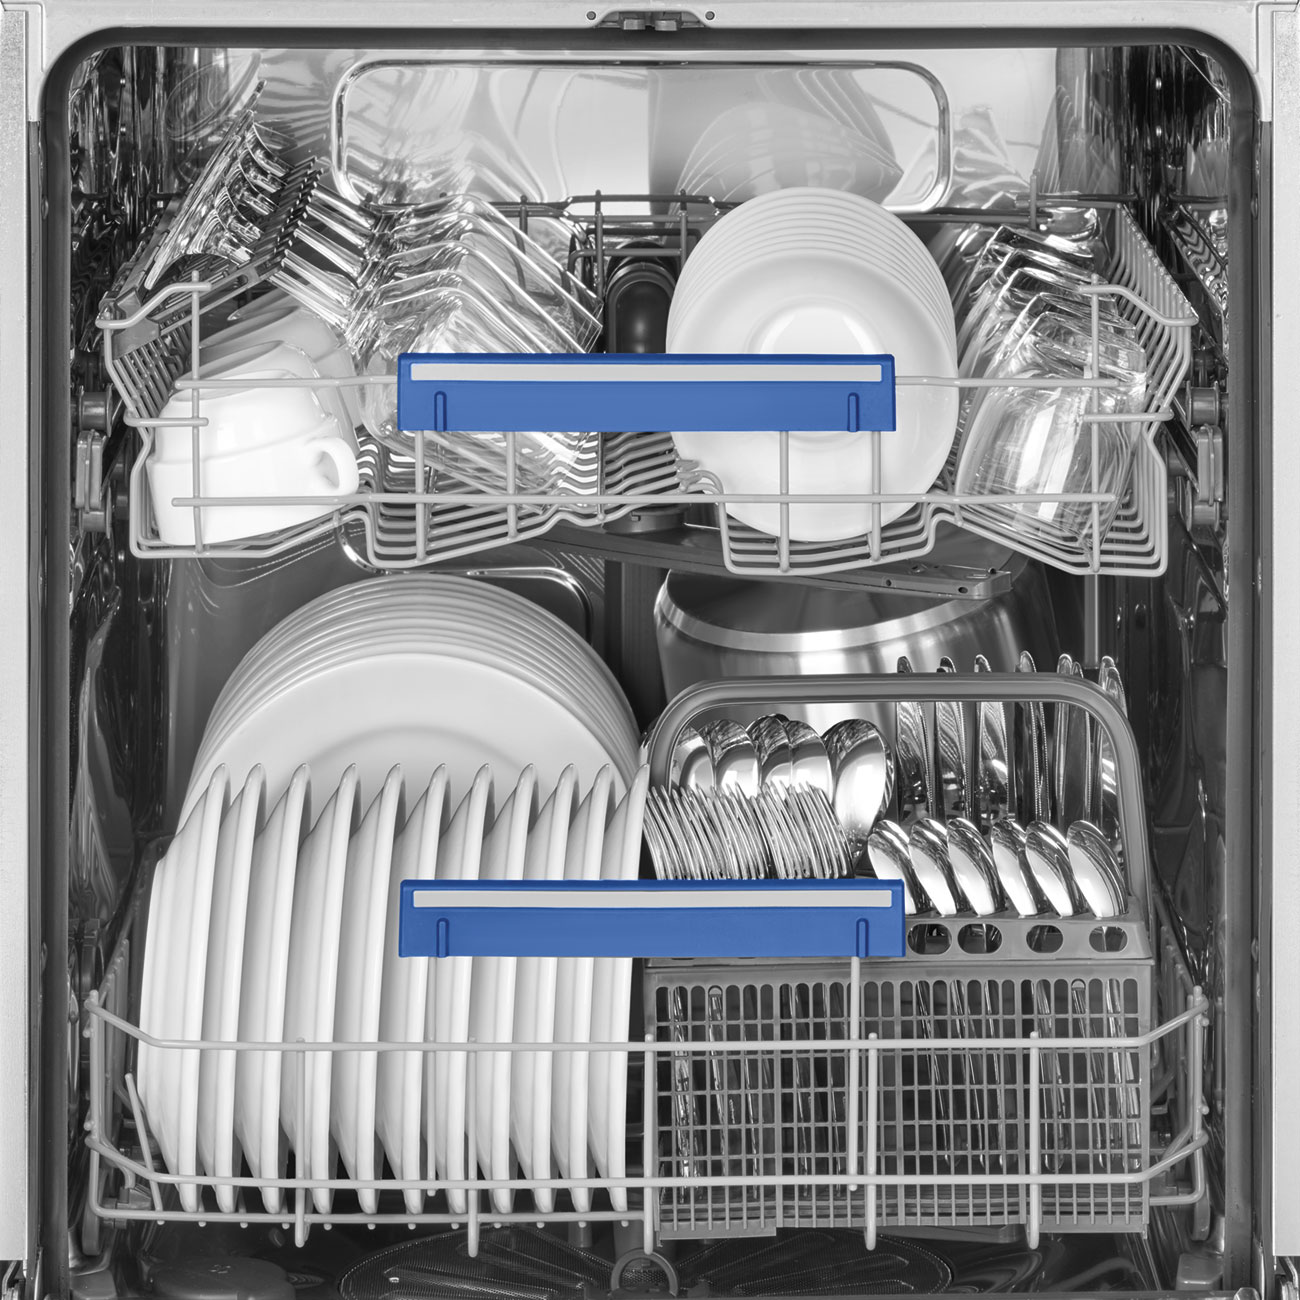  dishwasher 60 cm Smeg_10